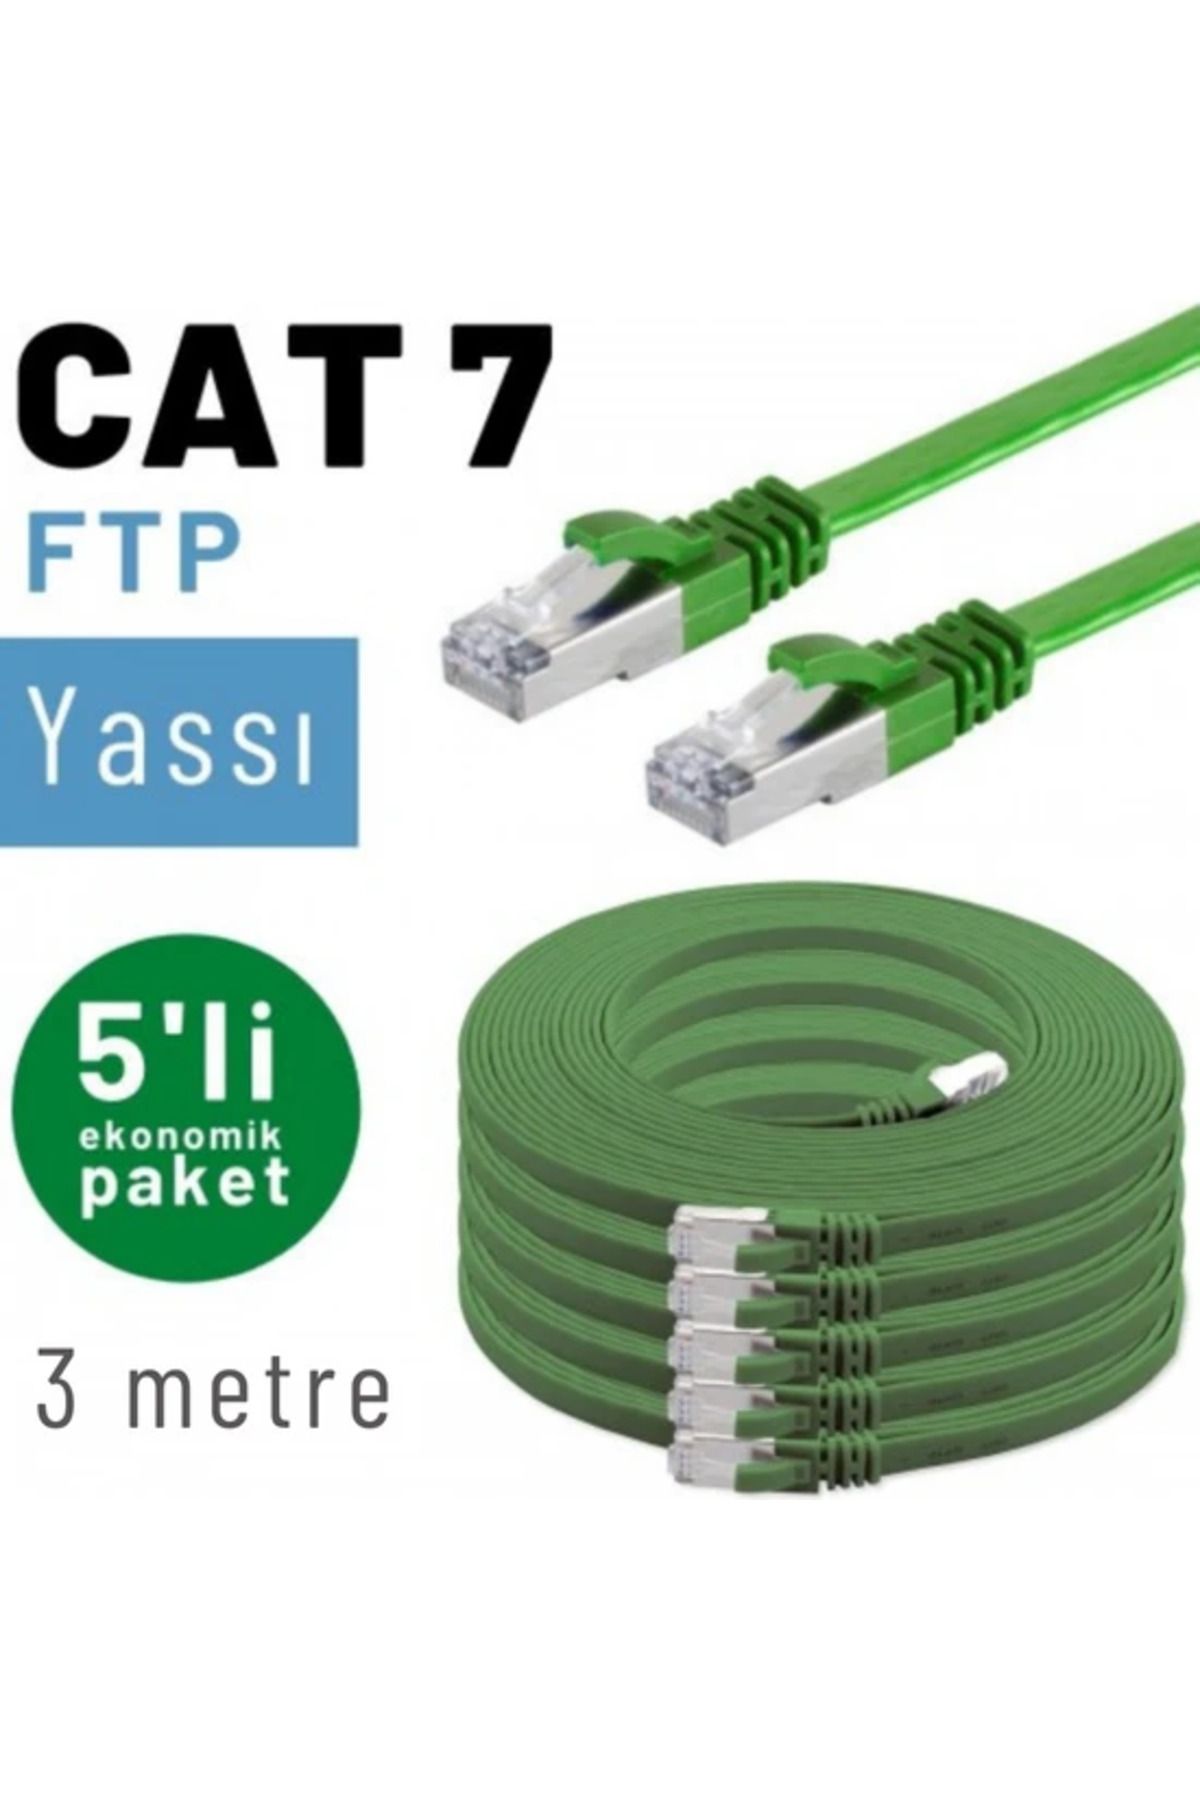 IRENIS 5 Adet 3 Metre Cat7 Kablo Yassı Ftp Ethernet Network Lan Kablosu, Yeşil